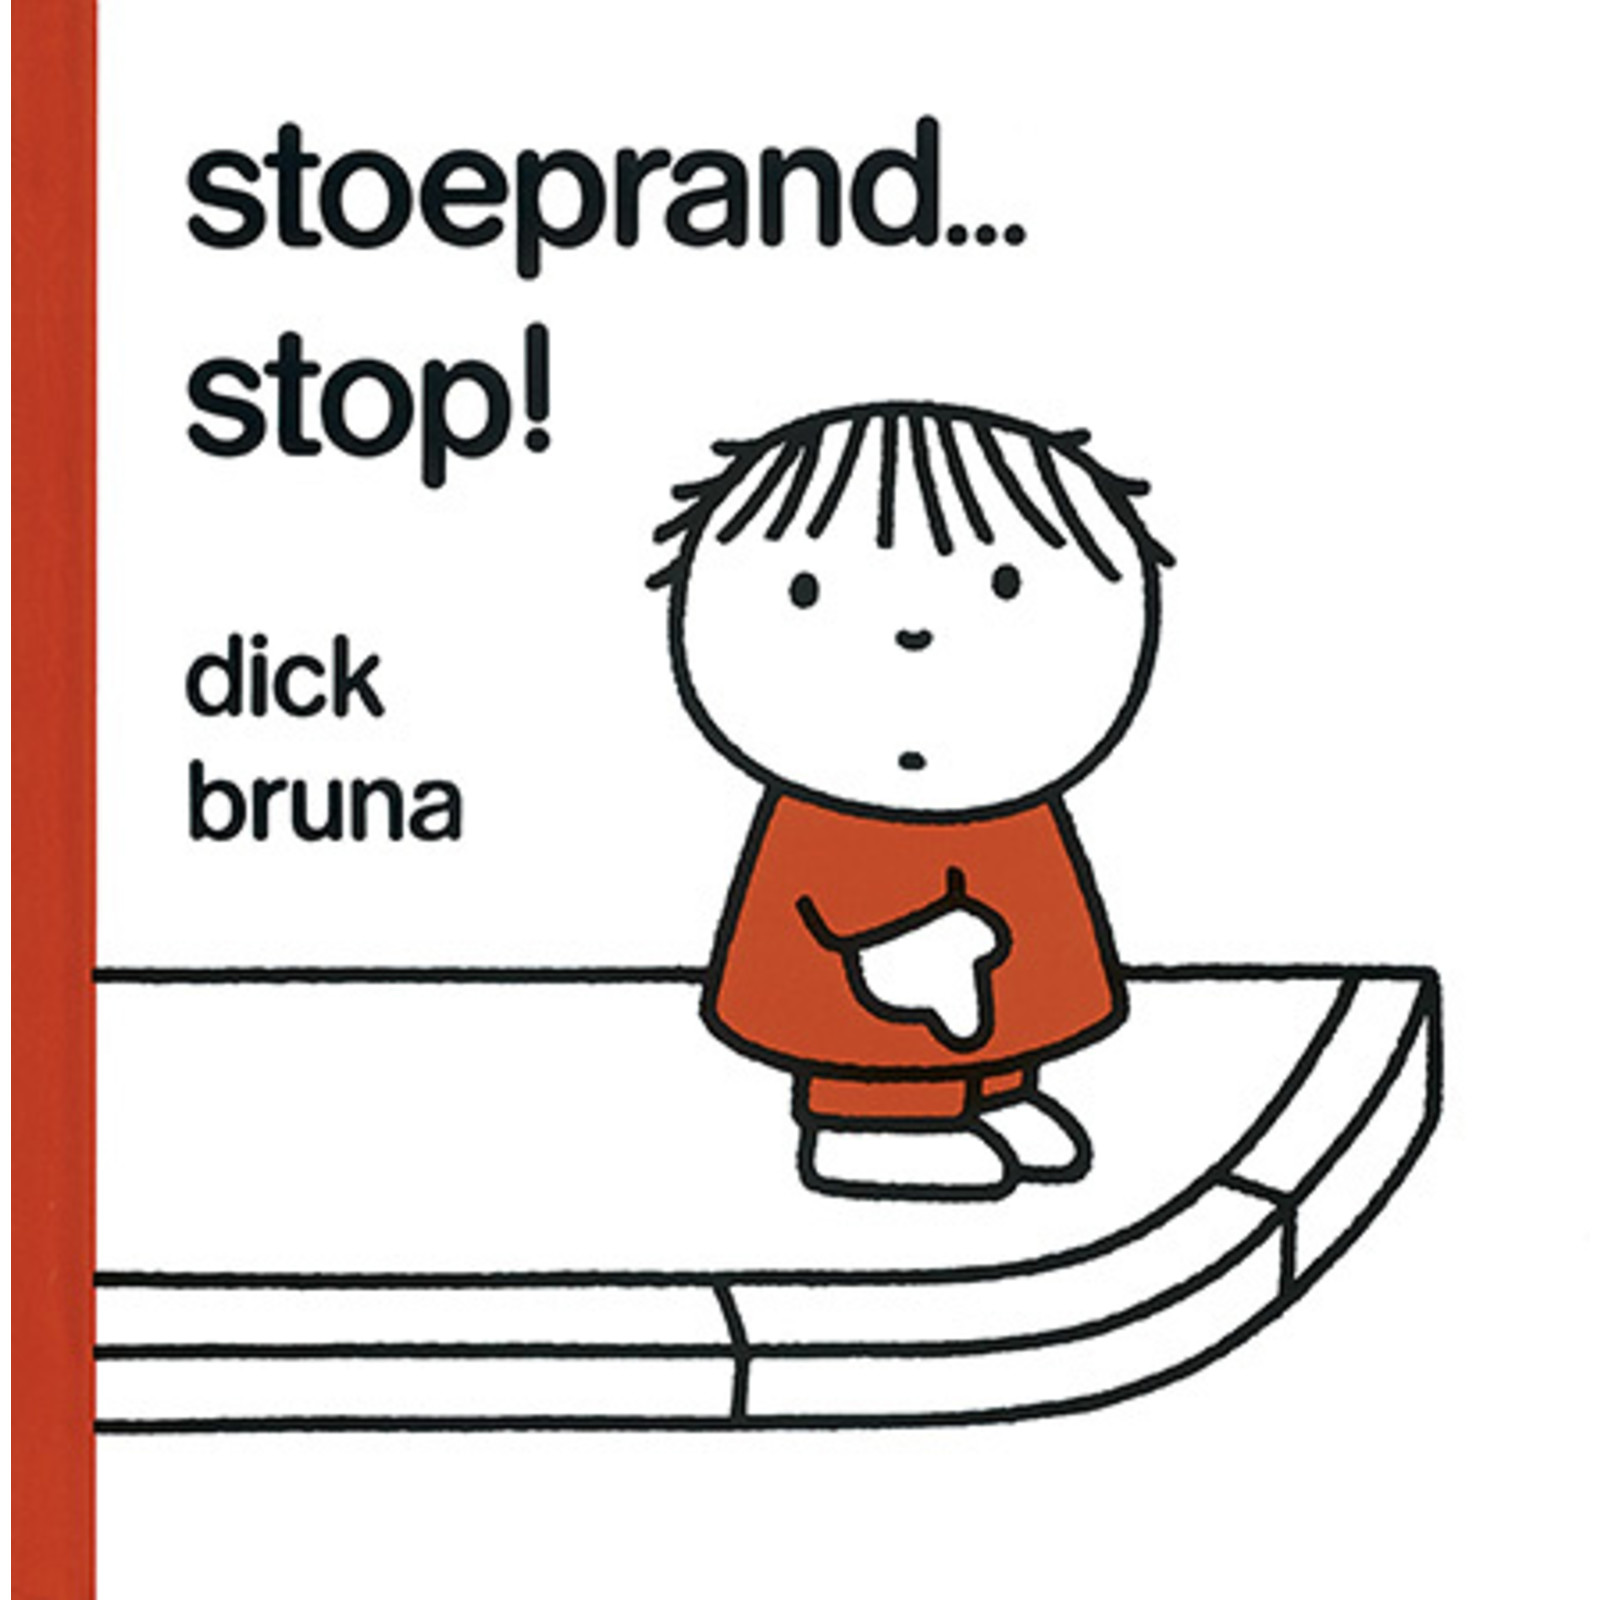 stoeprand ...stop!